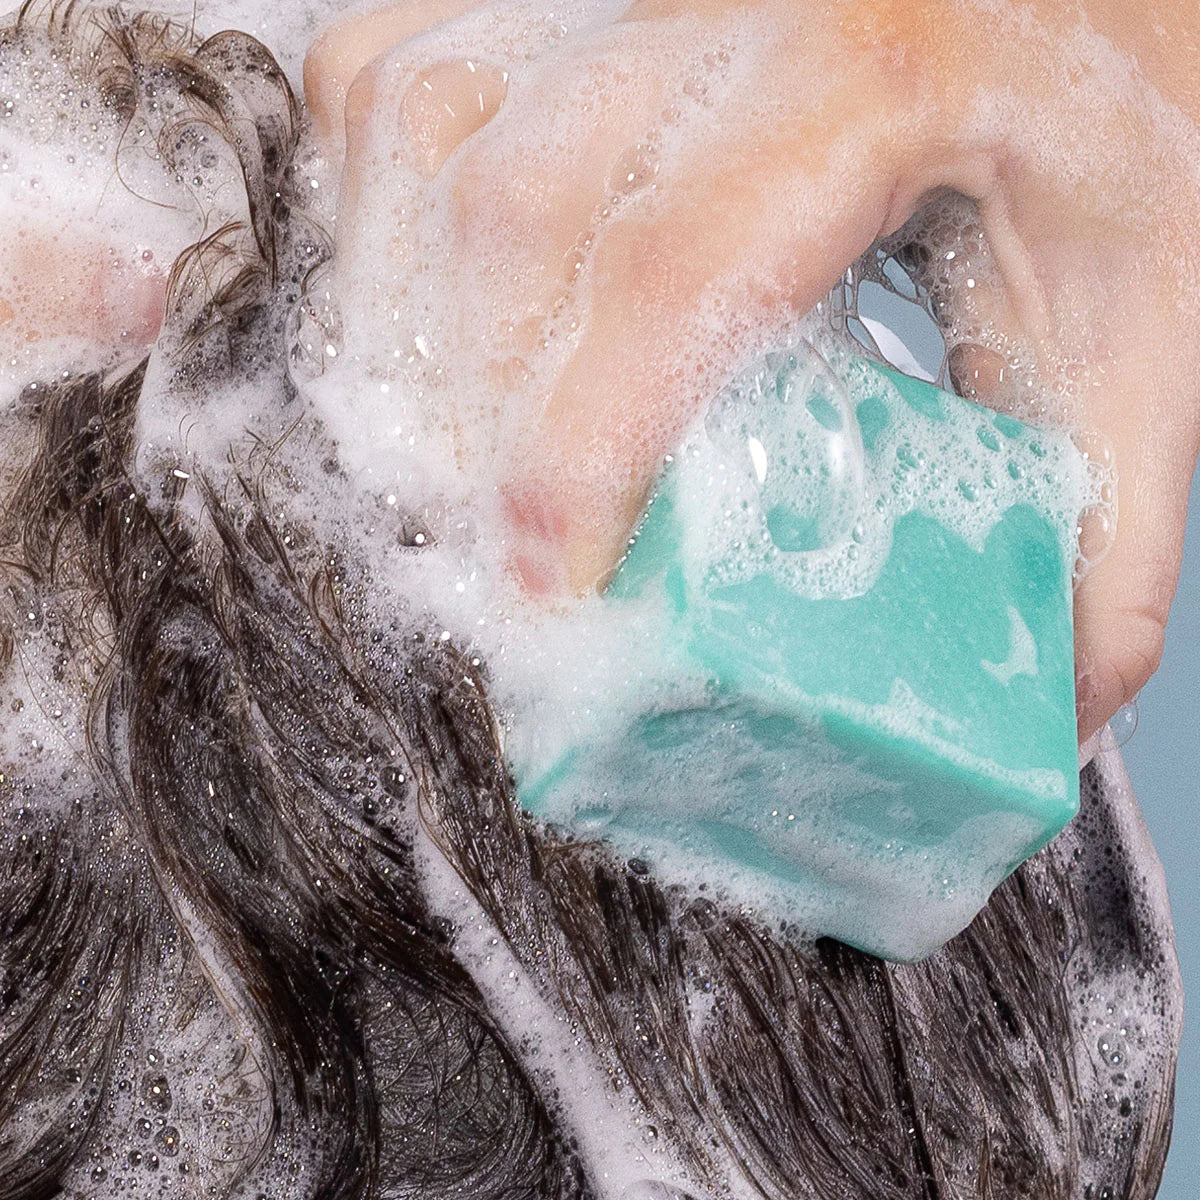 Ethique Replenishing Shampoo Bar for Dry Hair: Mintasy-The Living Co.